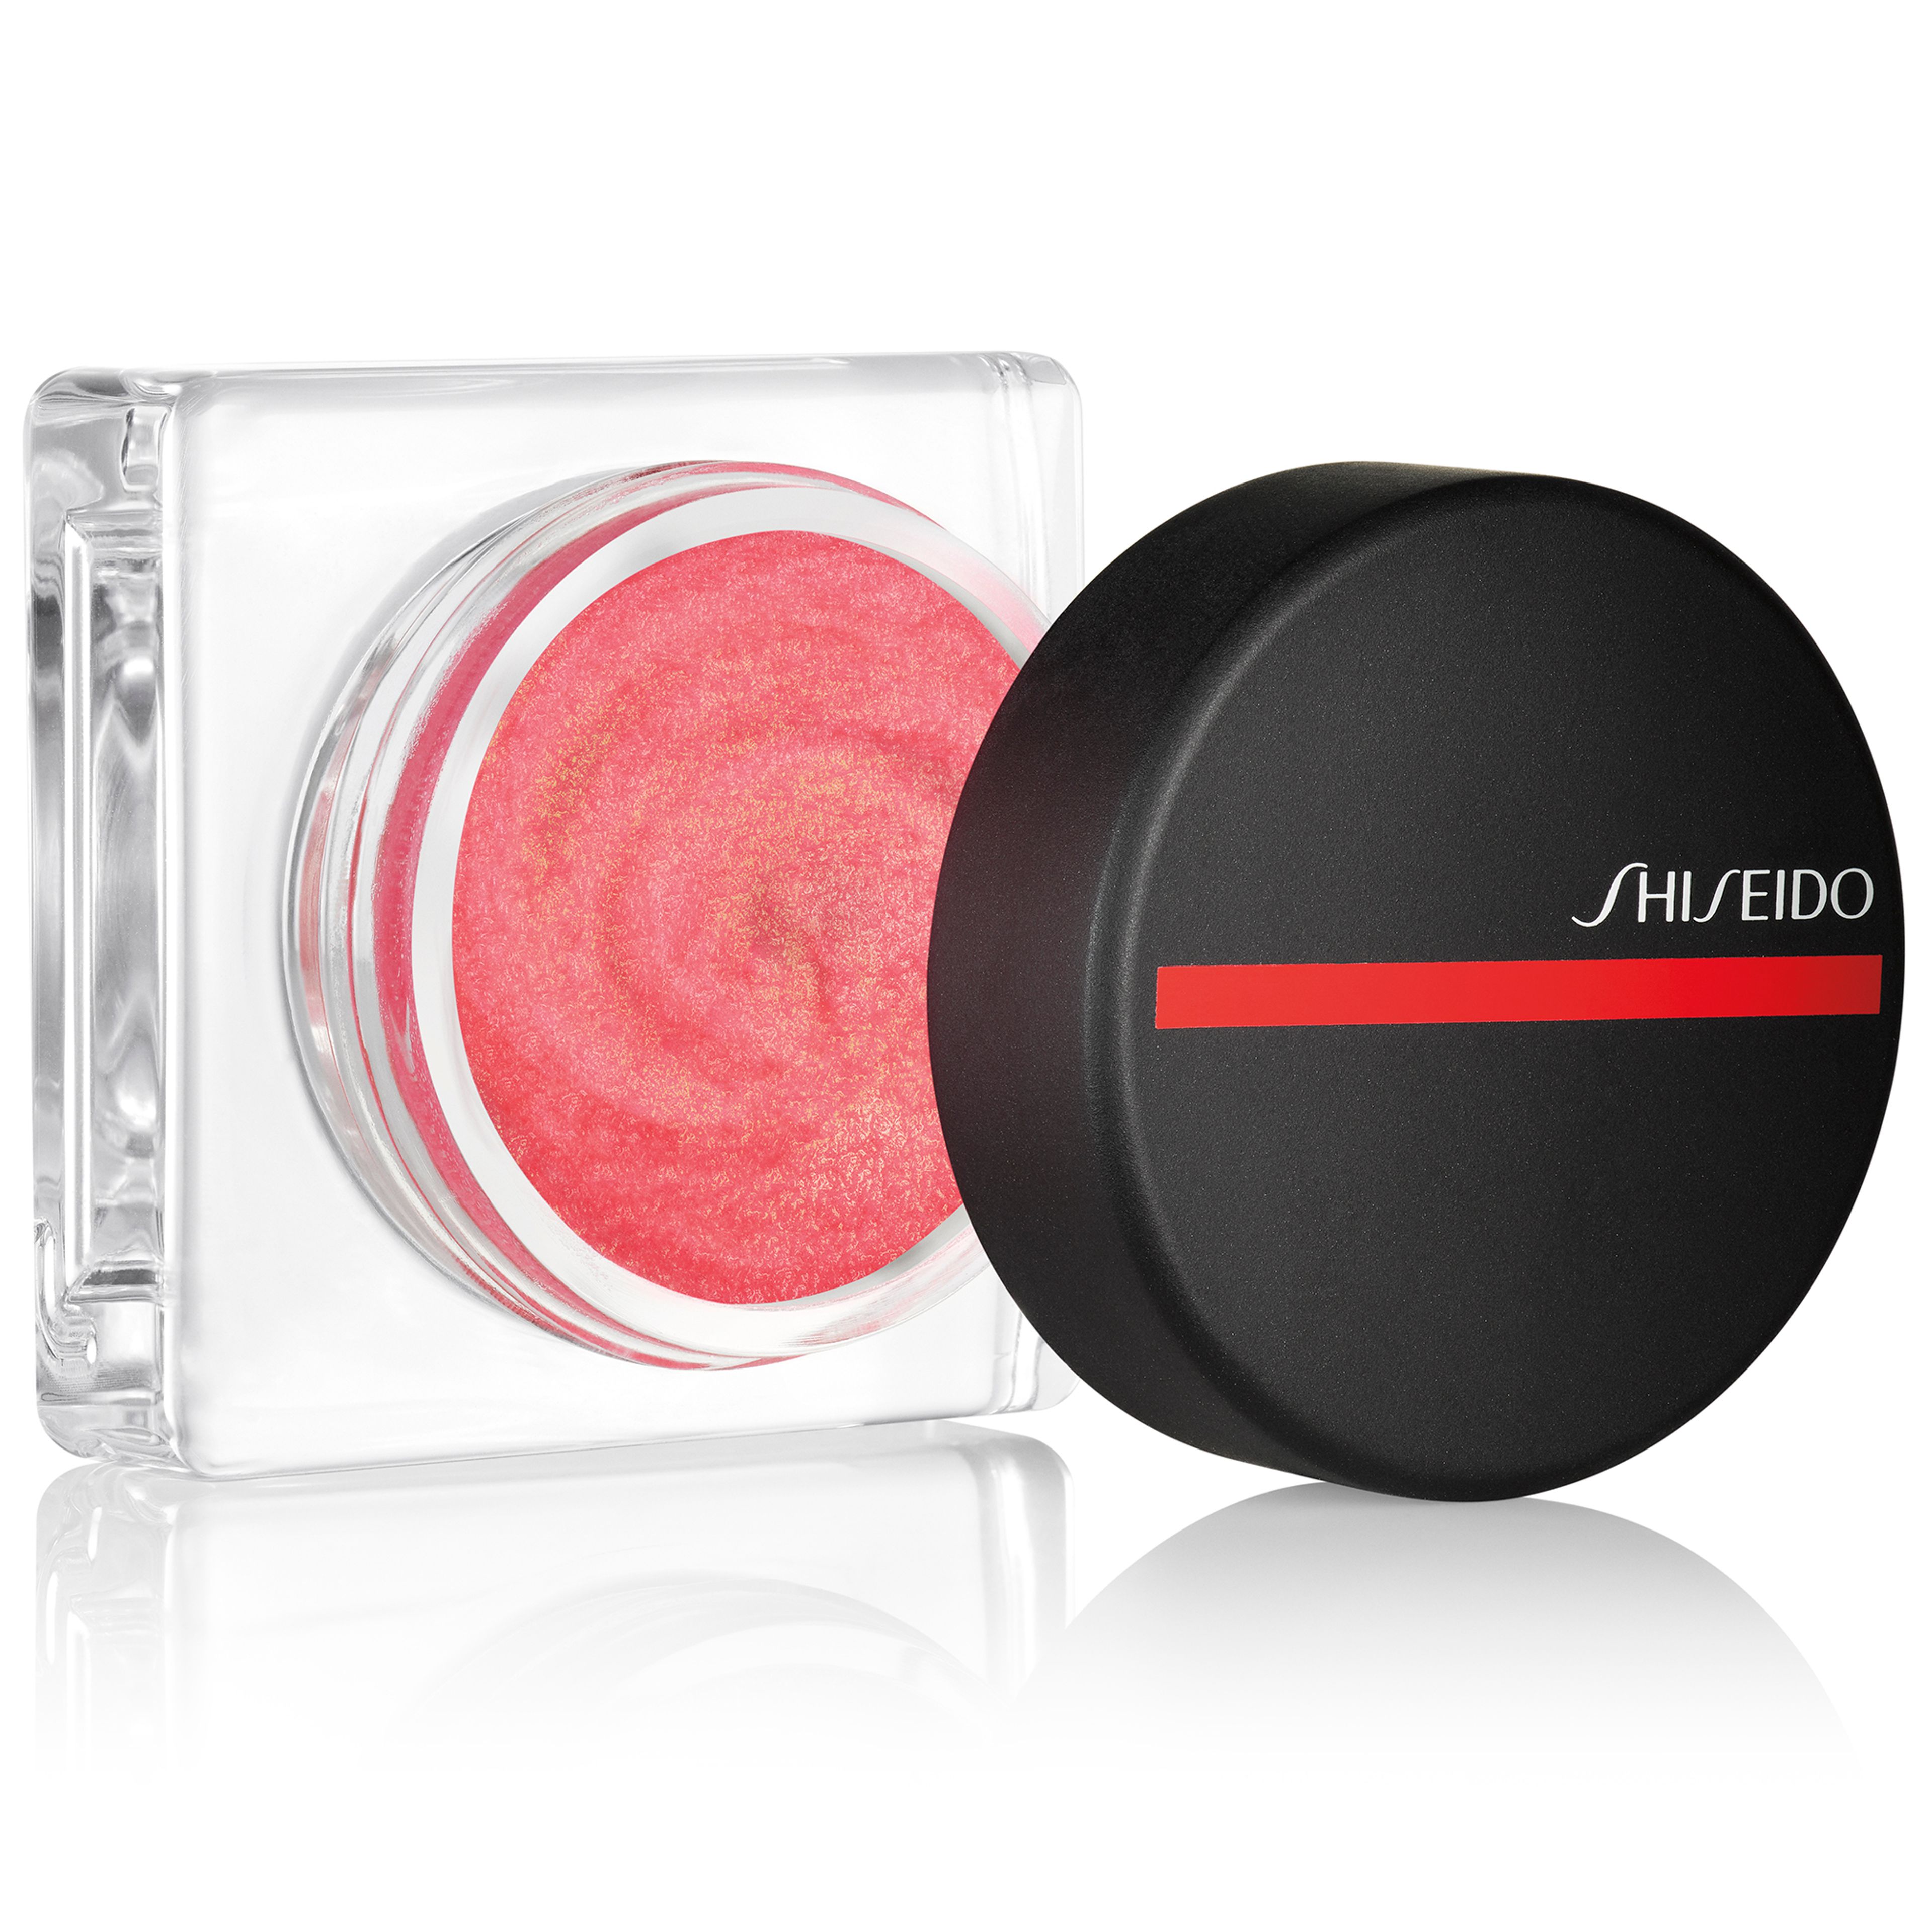 Shiseido Minimalist Whippedpowder Blush 1